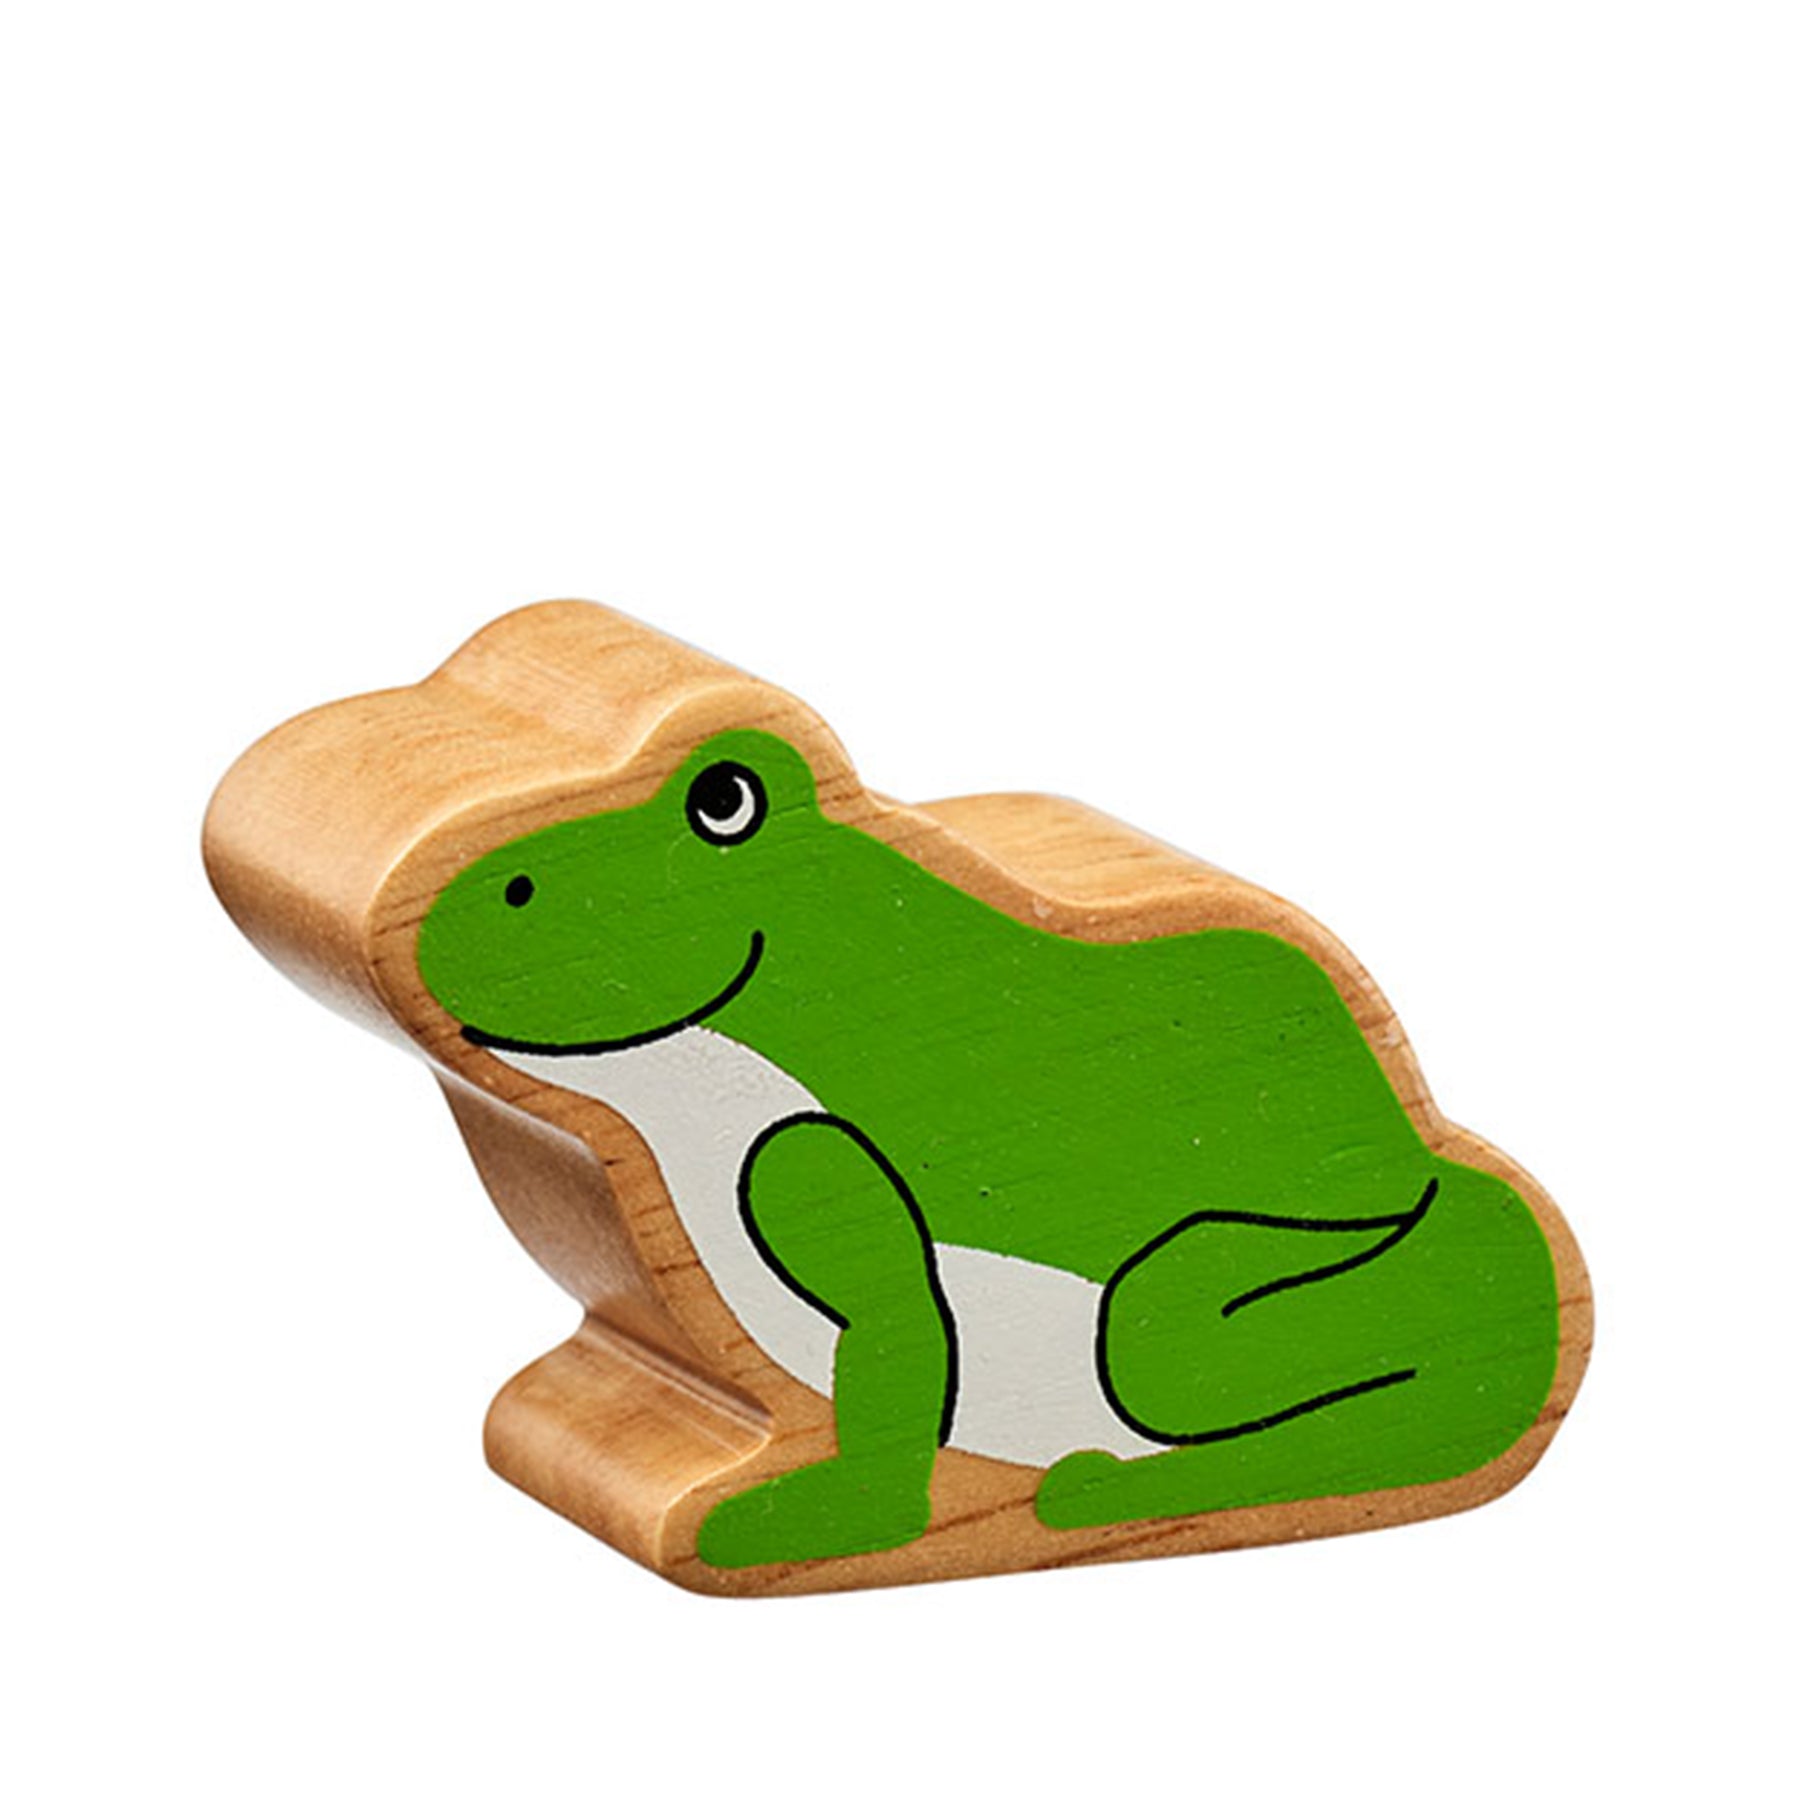 Wooden green frog